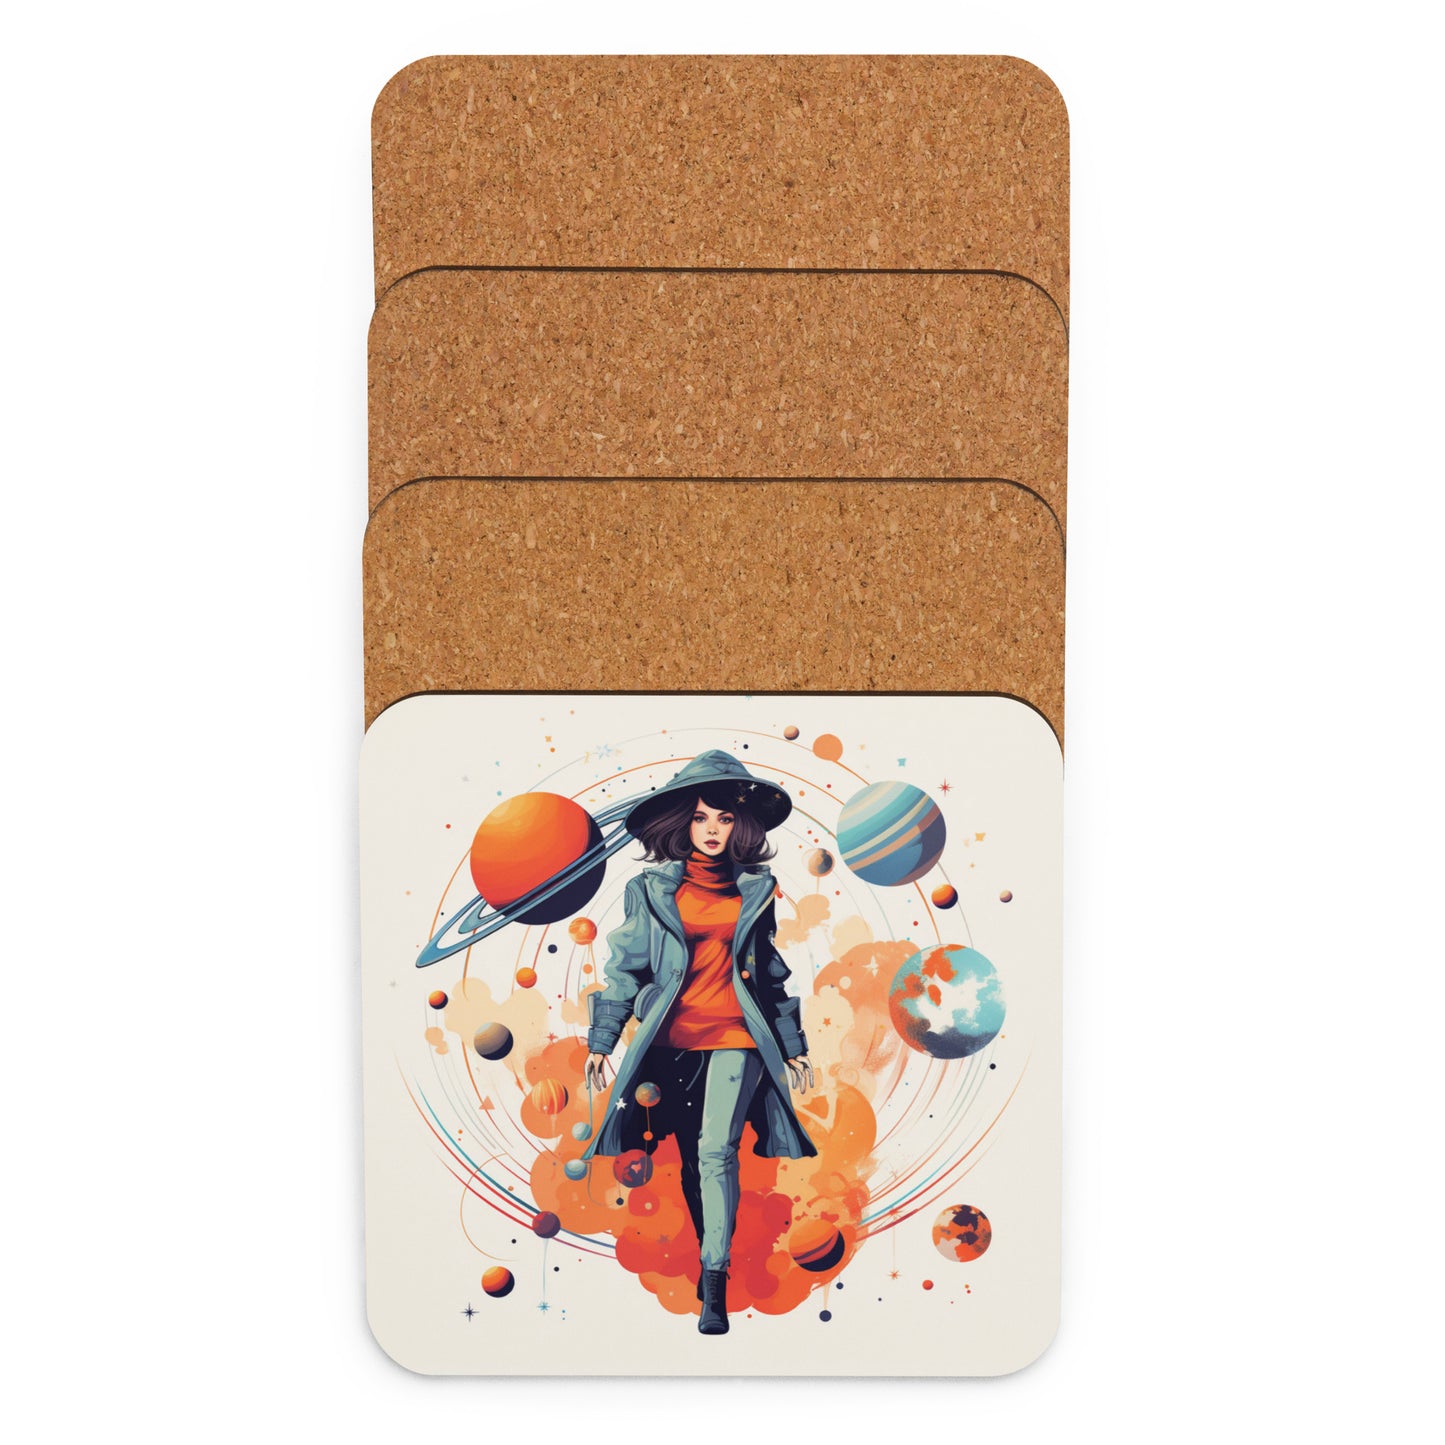 'Astrogirl Cork-back coaster | Spiritual, Astrology themed drink coaster